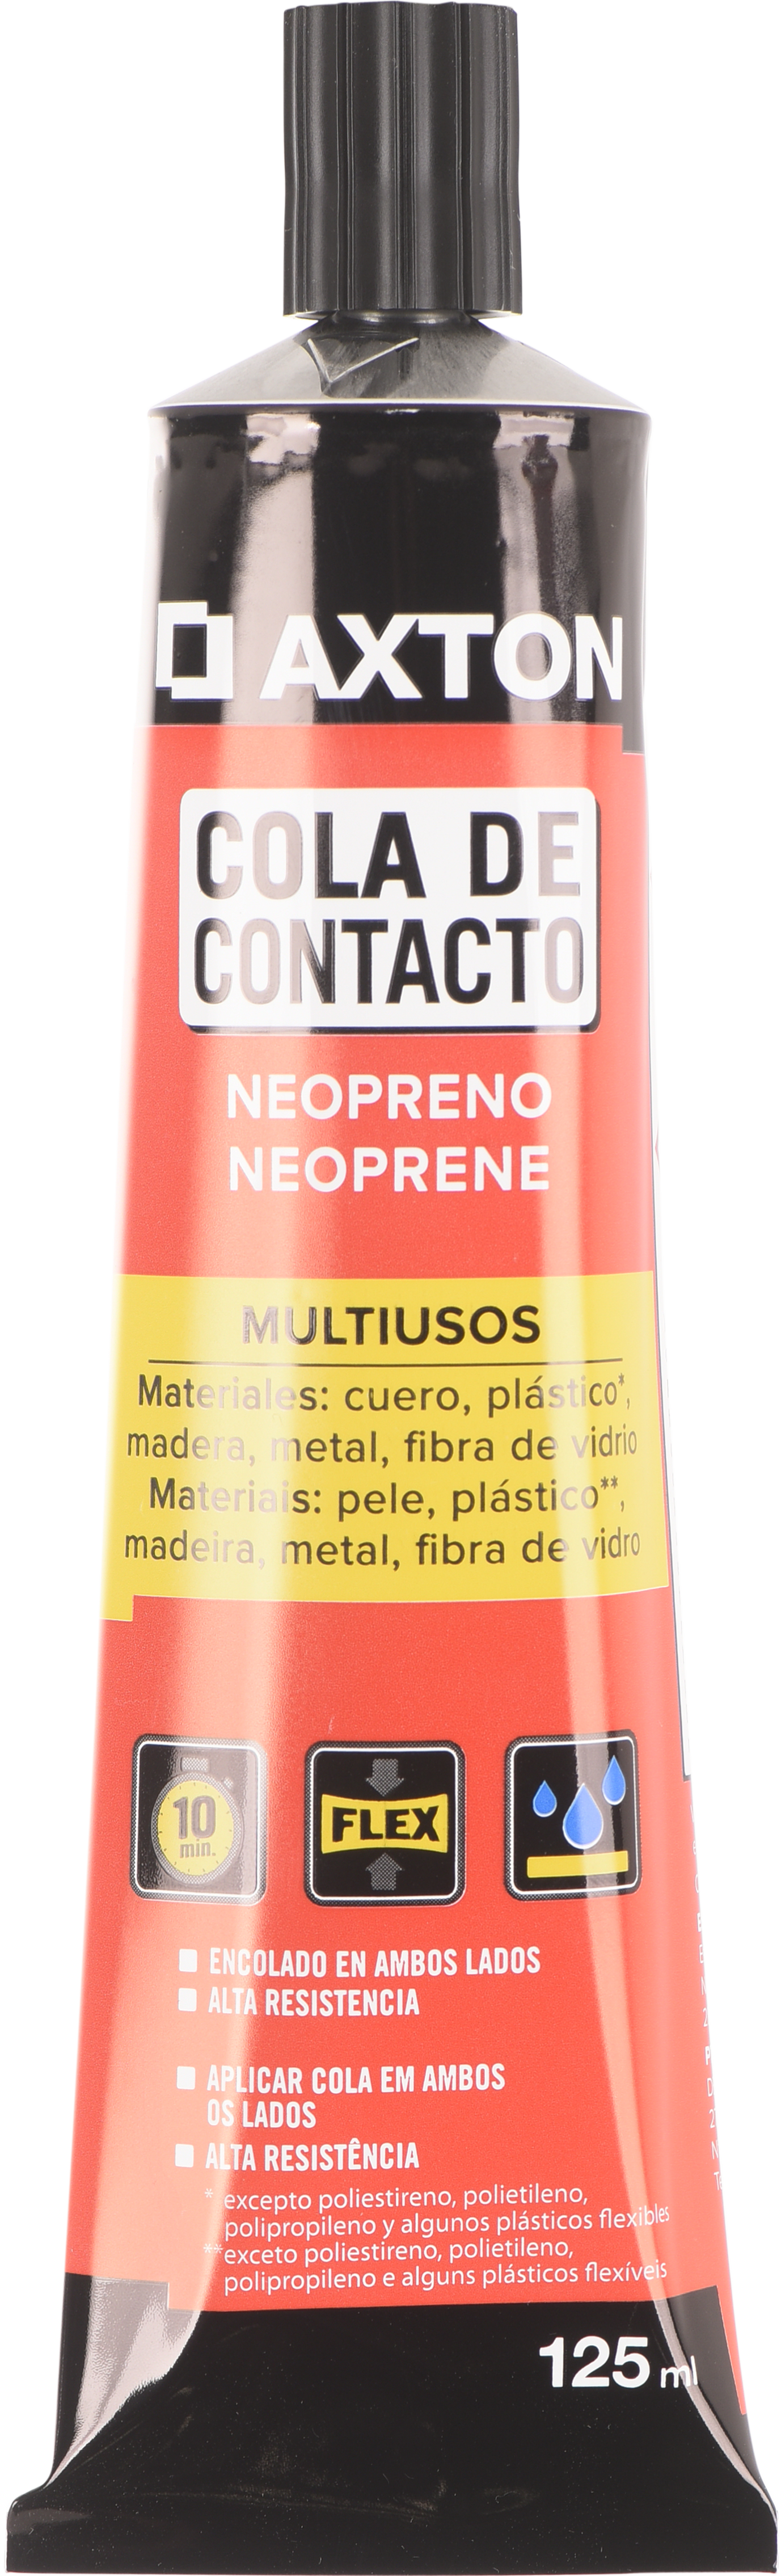 Cola de Contacto Contactceys Bote 125 ml.- Eguia